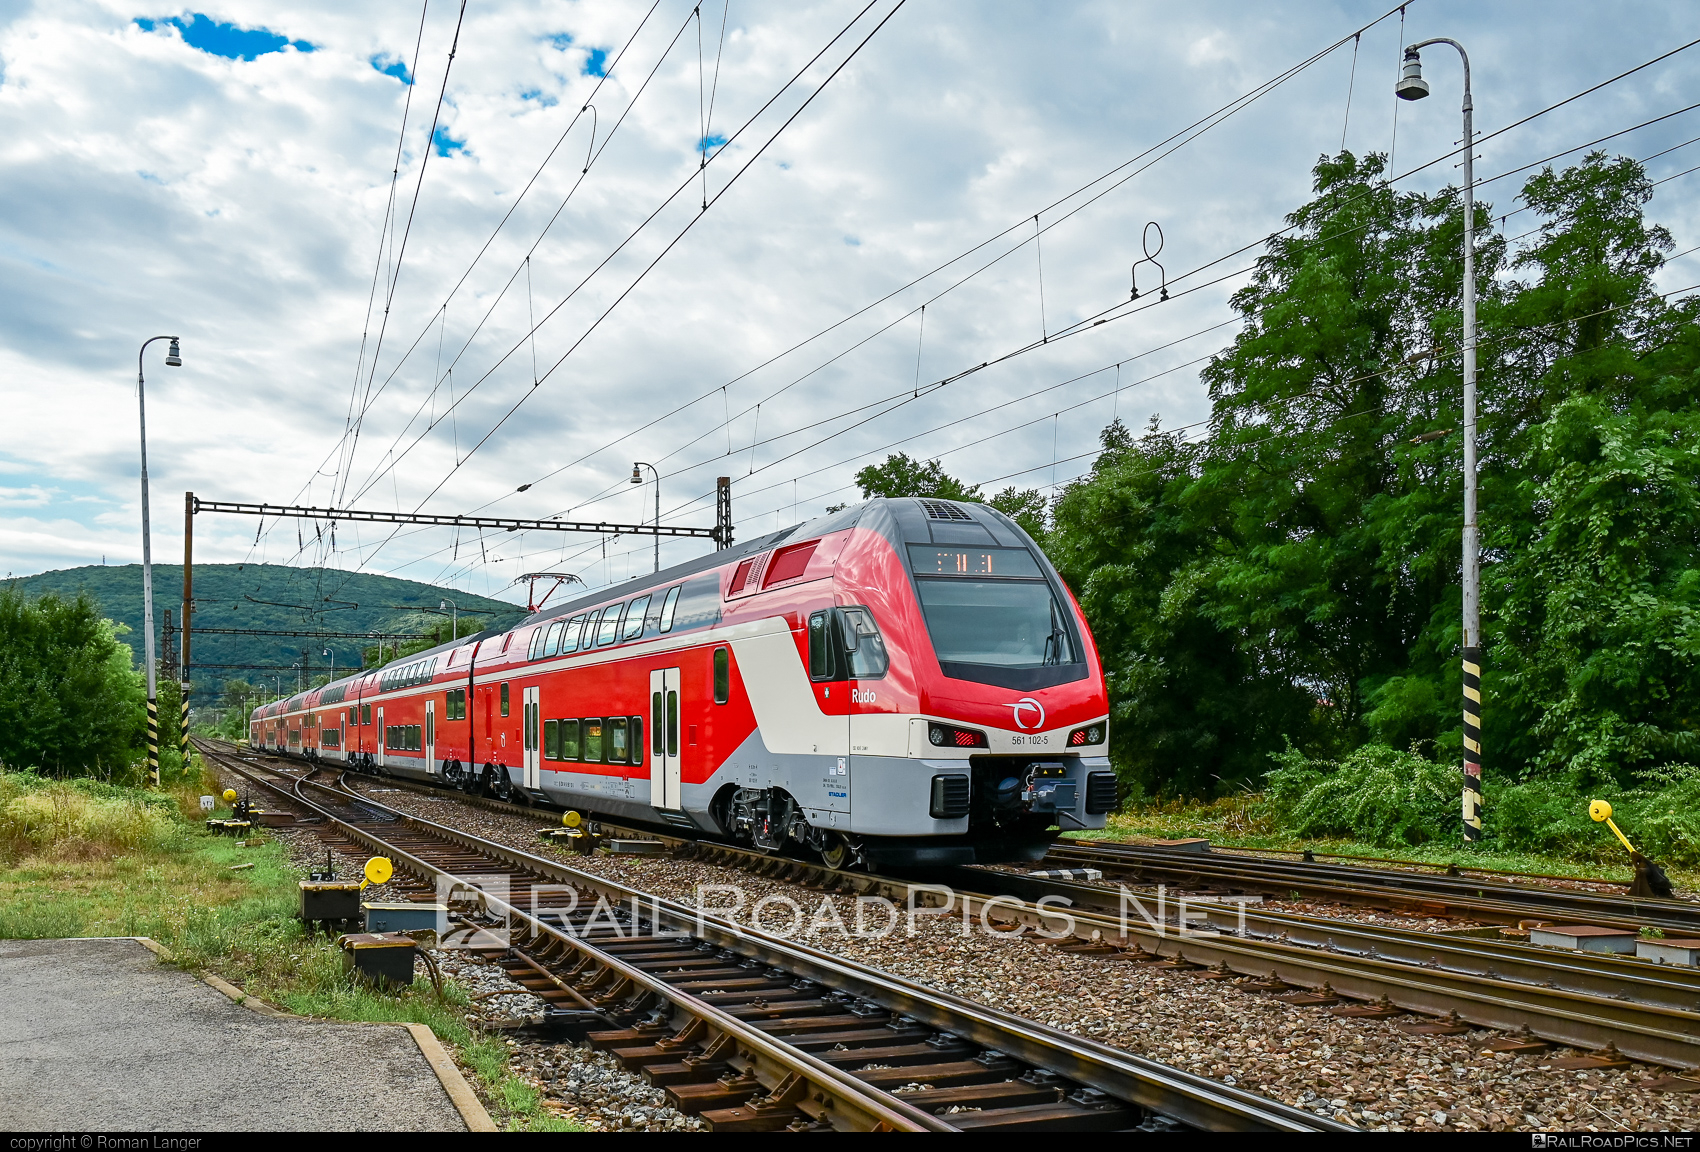 Stadler KISS - 561 102-5 operated by Železničná Spoločnost' Slovensko, a.s. #ZeleznicnaSpolocnostSlovensko #stadler #stadlerKiss #stadlerrail #stadlerrailag #zssk